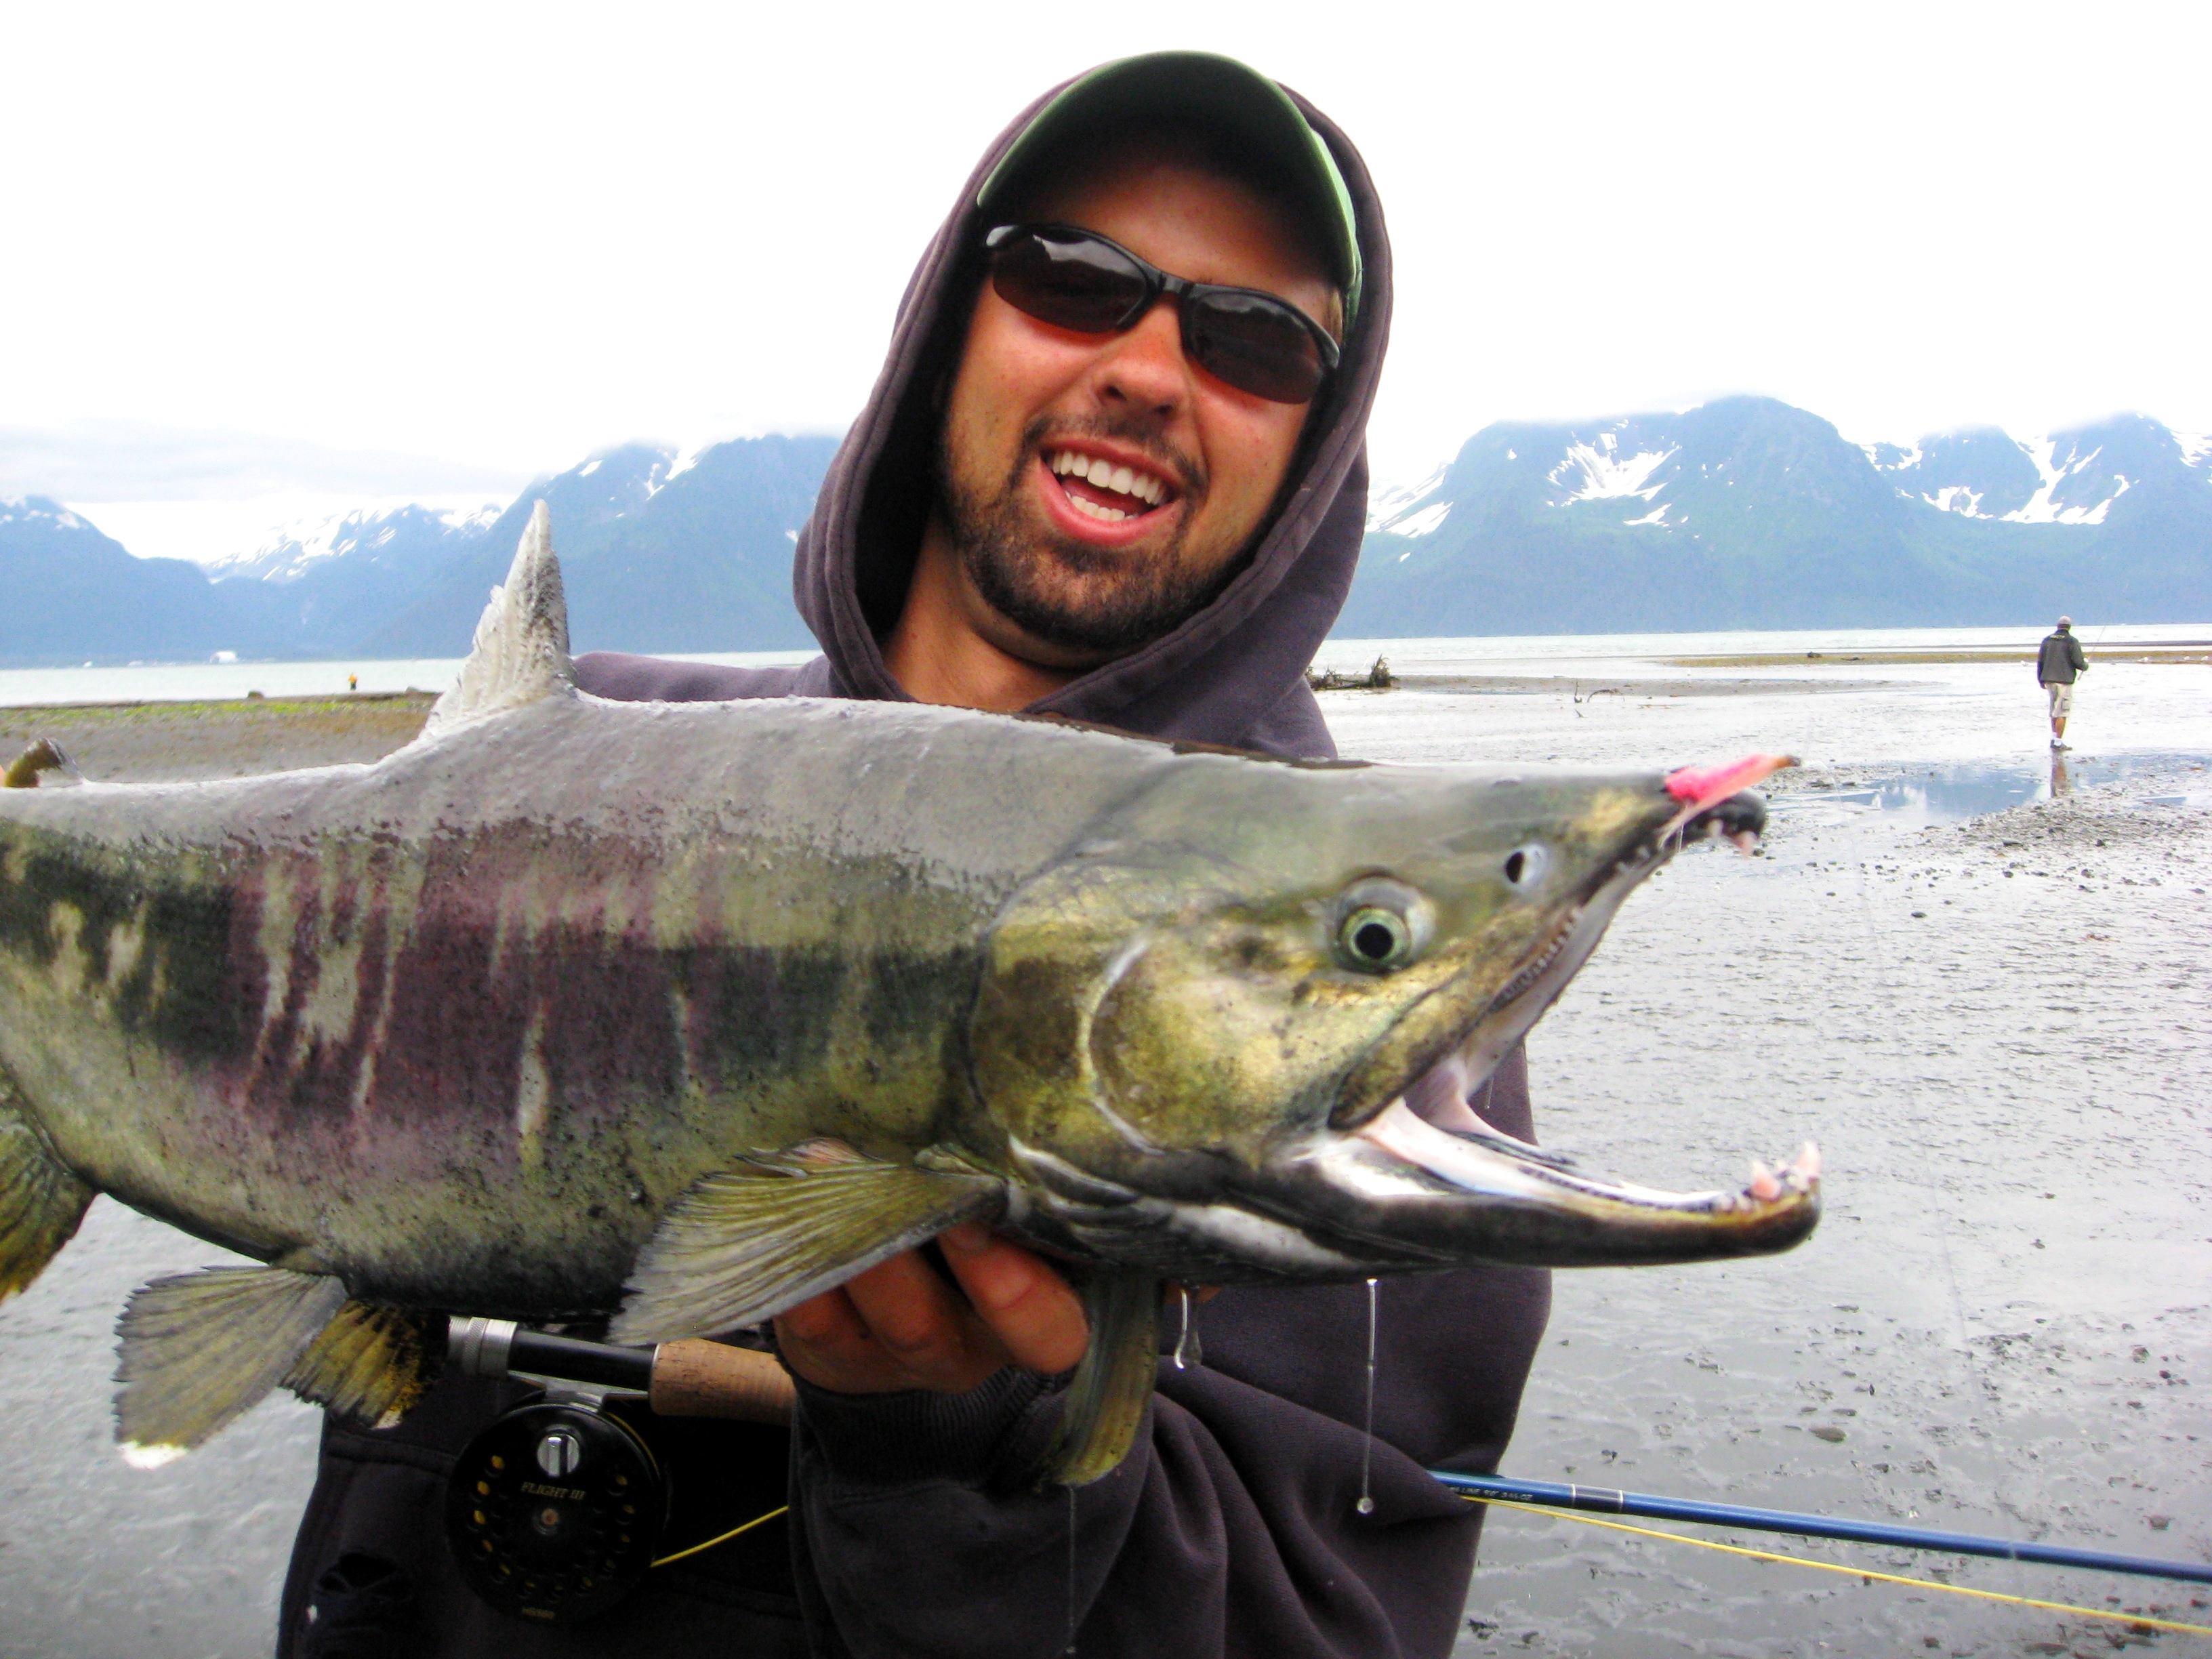 https://www.drifterslodge.com/wp-content/uploads/2018/08/Kenai-River-Drifters-Lodge-Pat-Lewallen-Guide-Chum-Salmon-in-Hope-Alaska.jpg